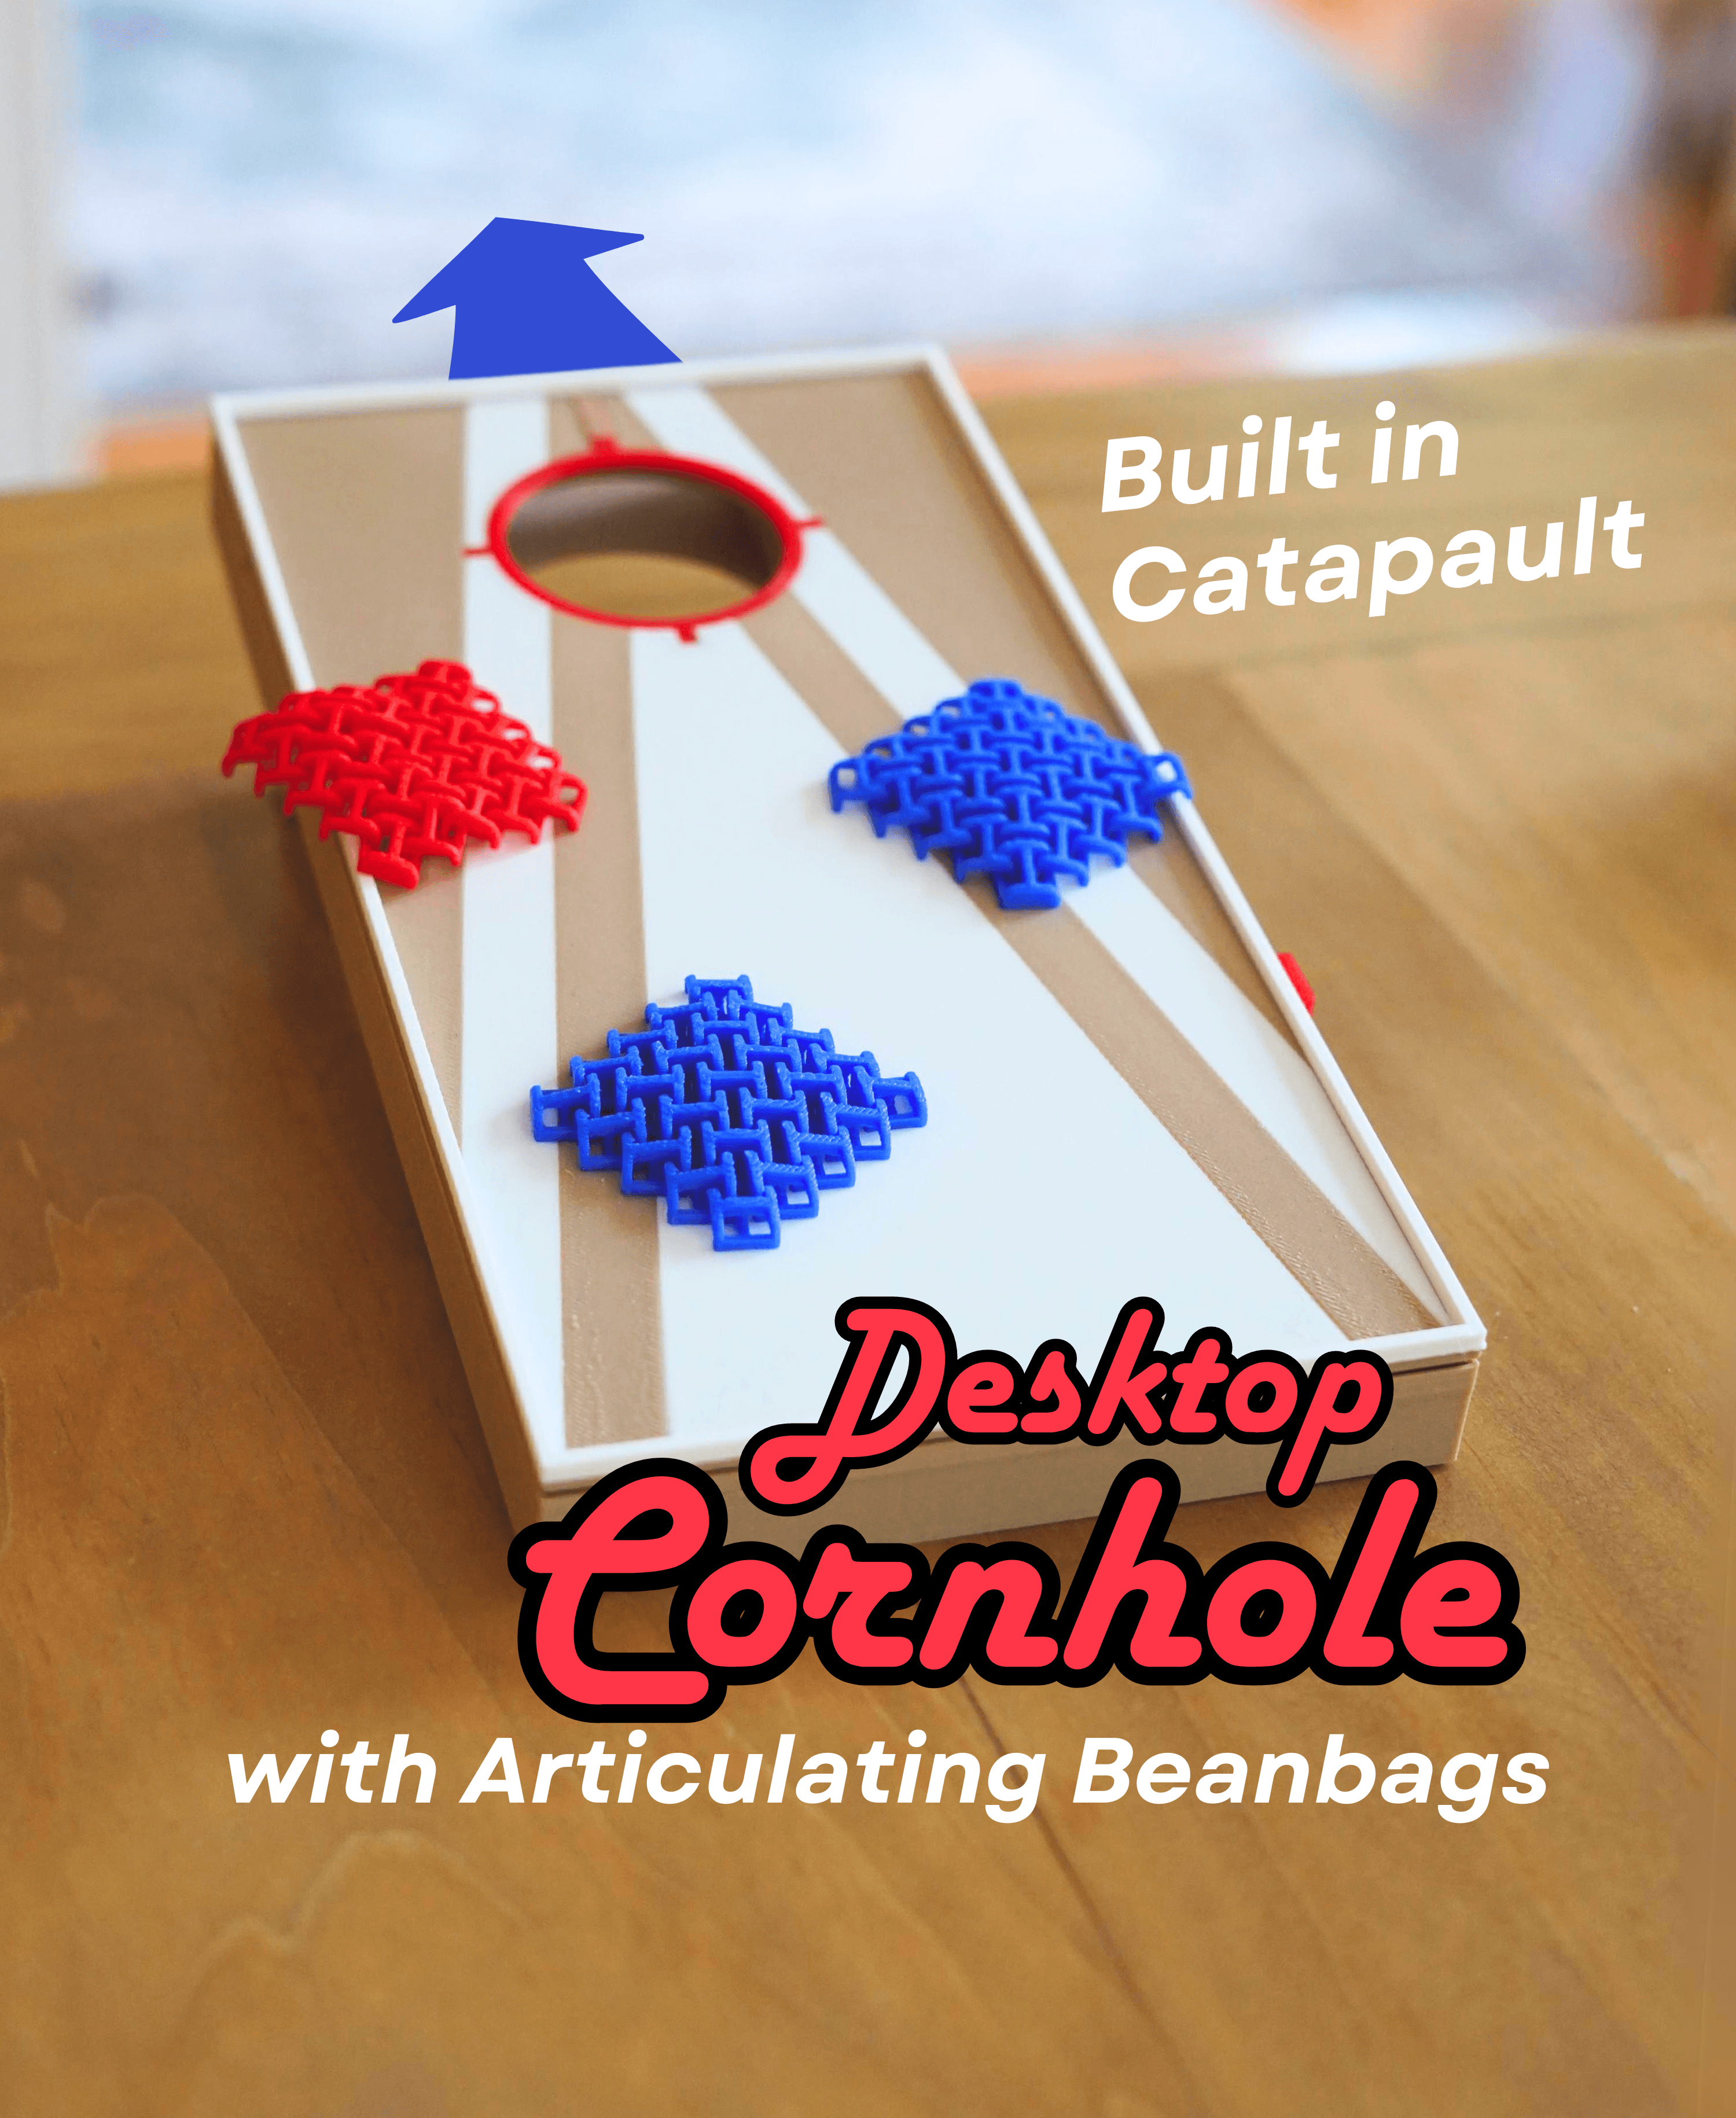 Desktop Cornhole - Catapult and articulating bean bags 3d model